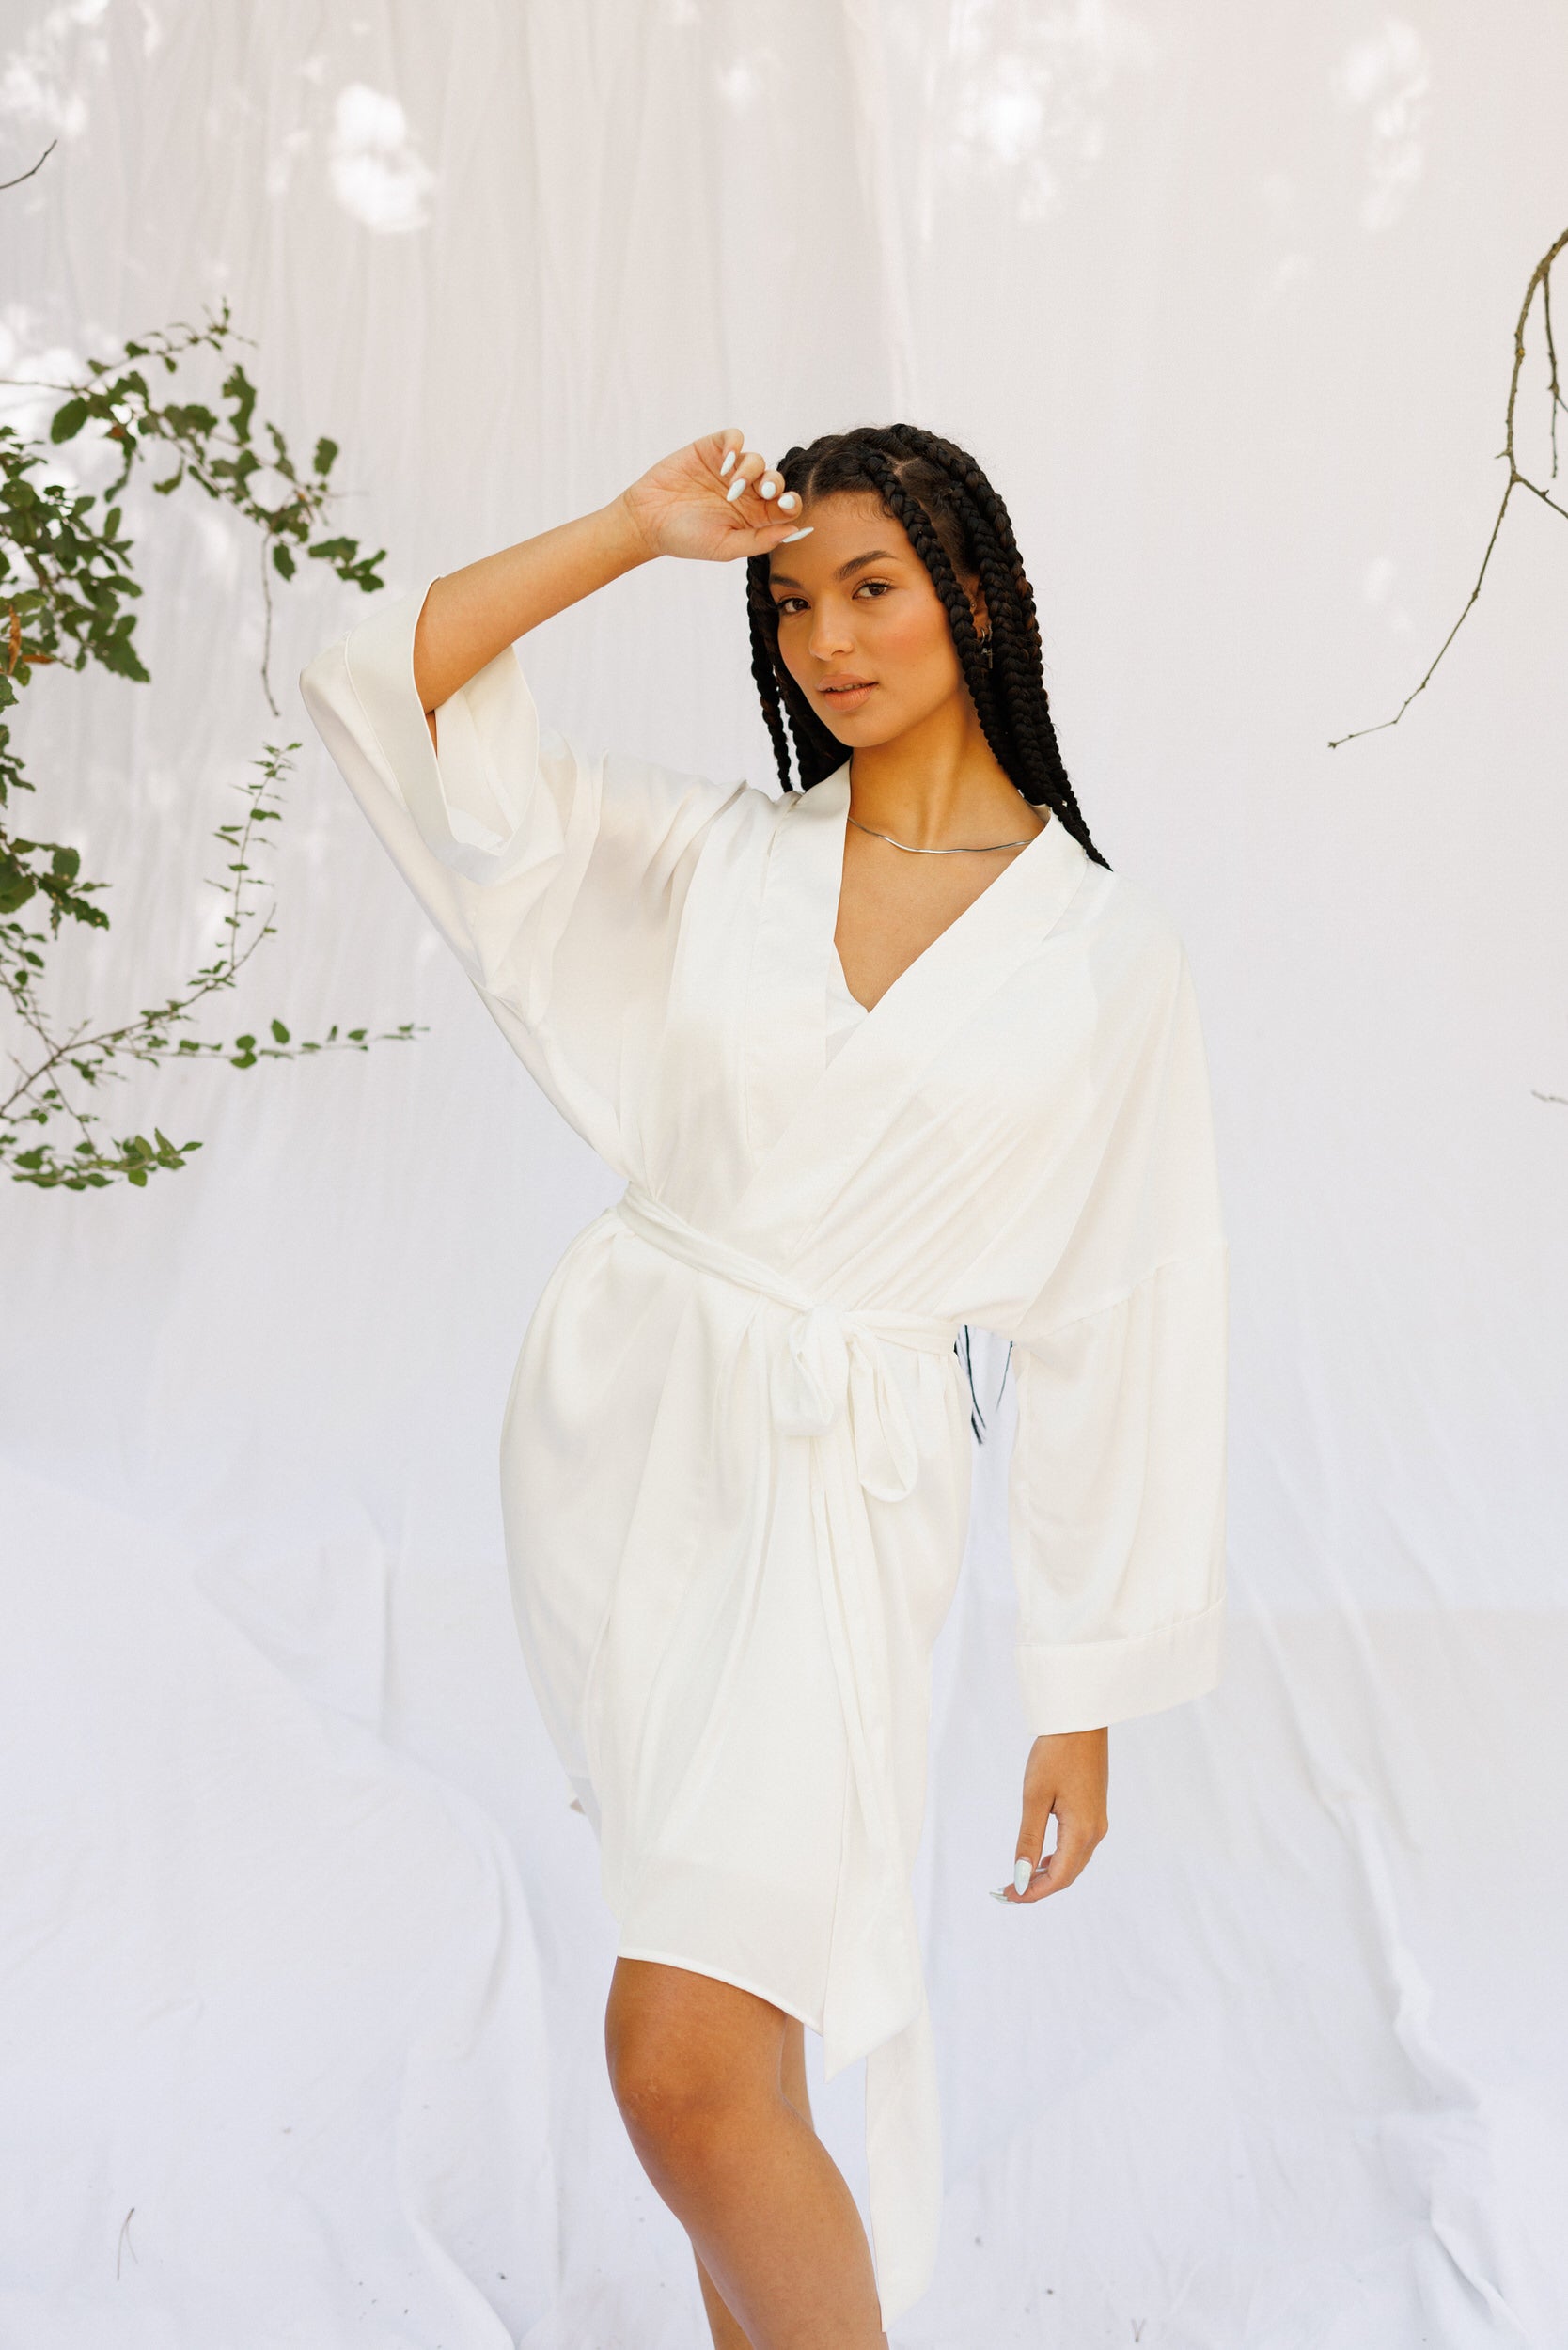 Model takes a pose in a white robe